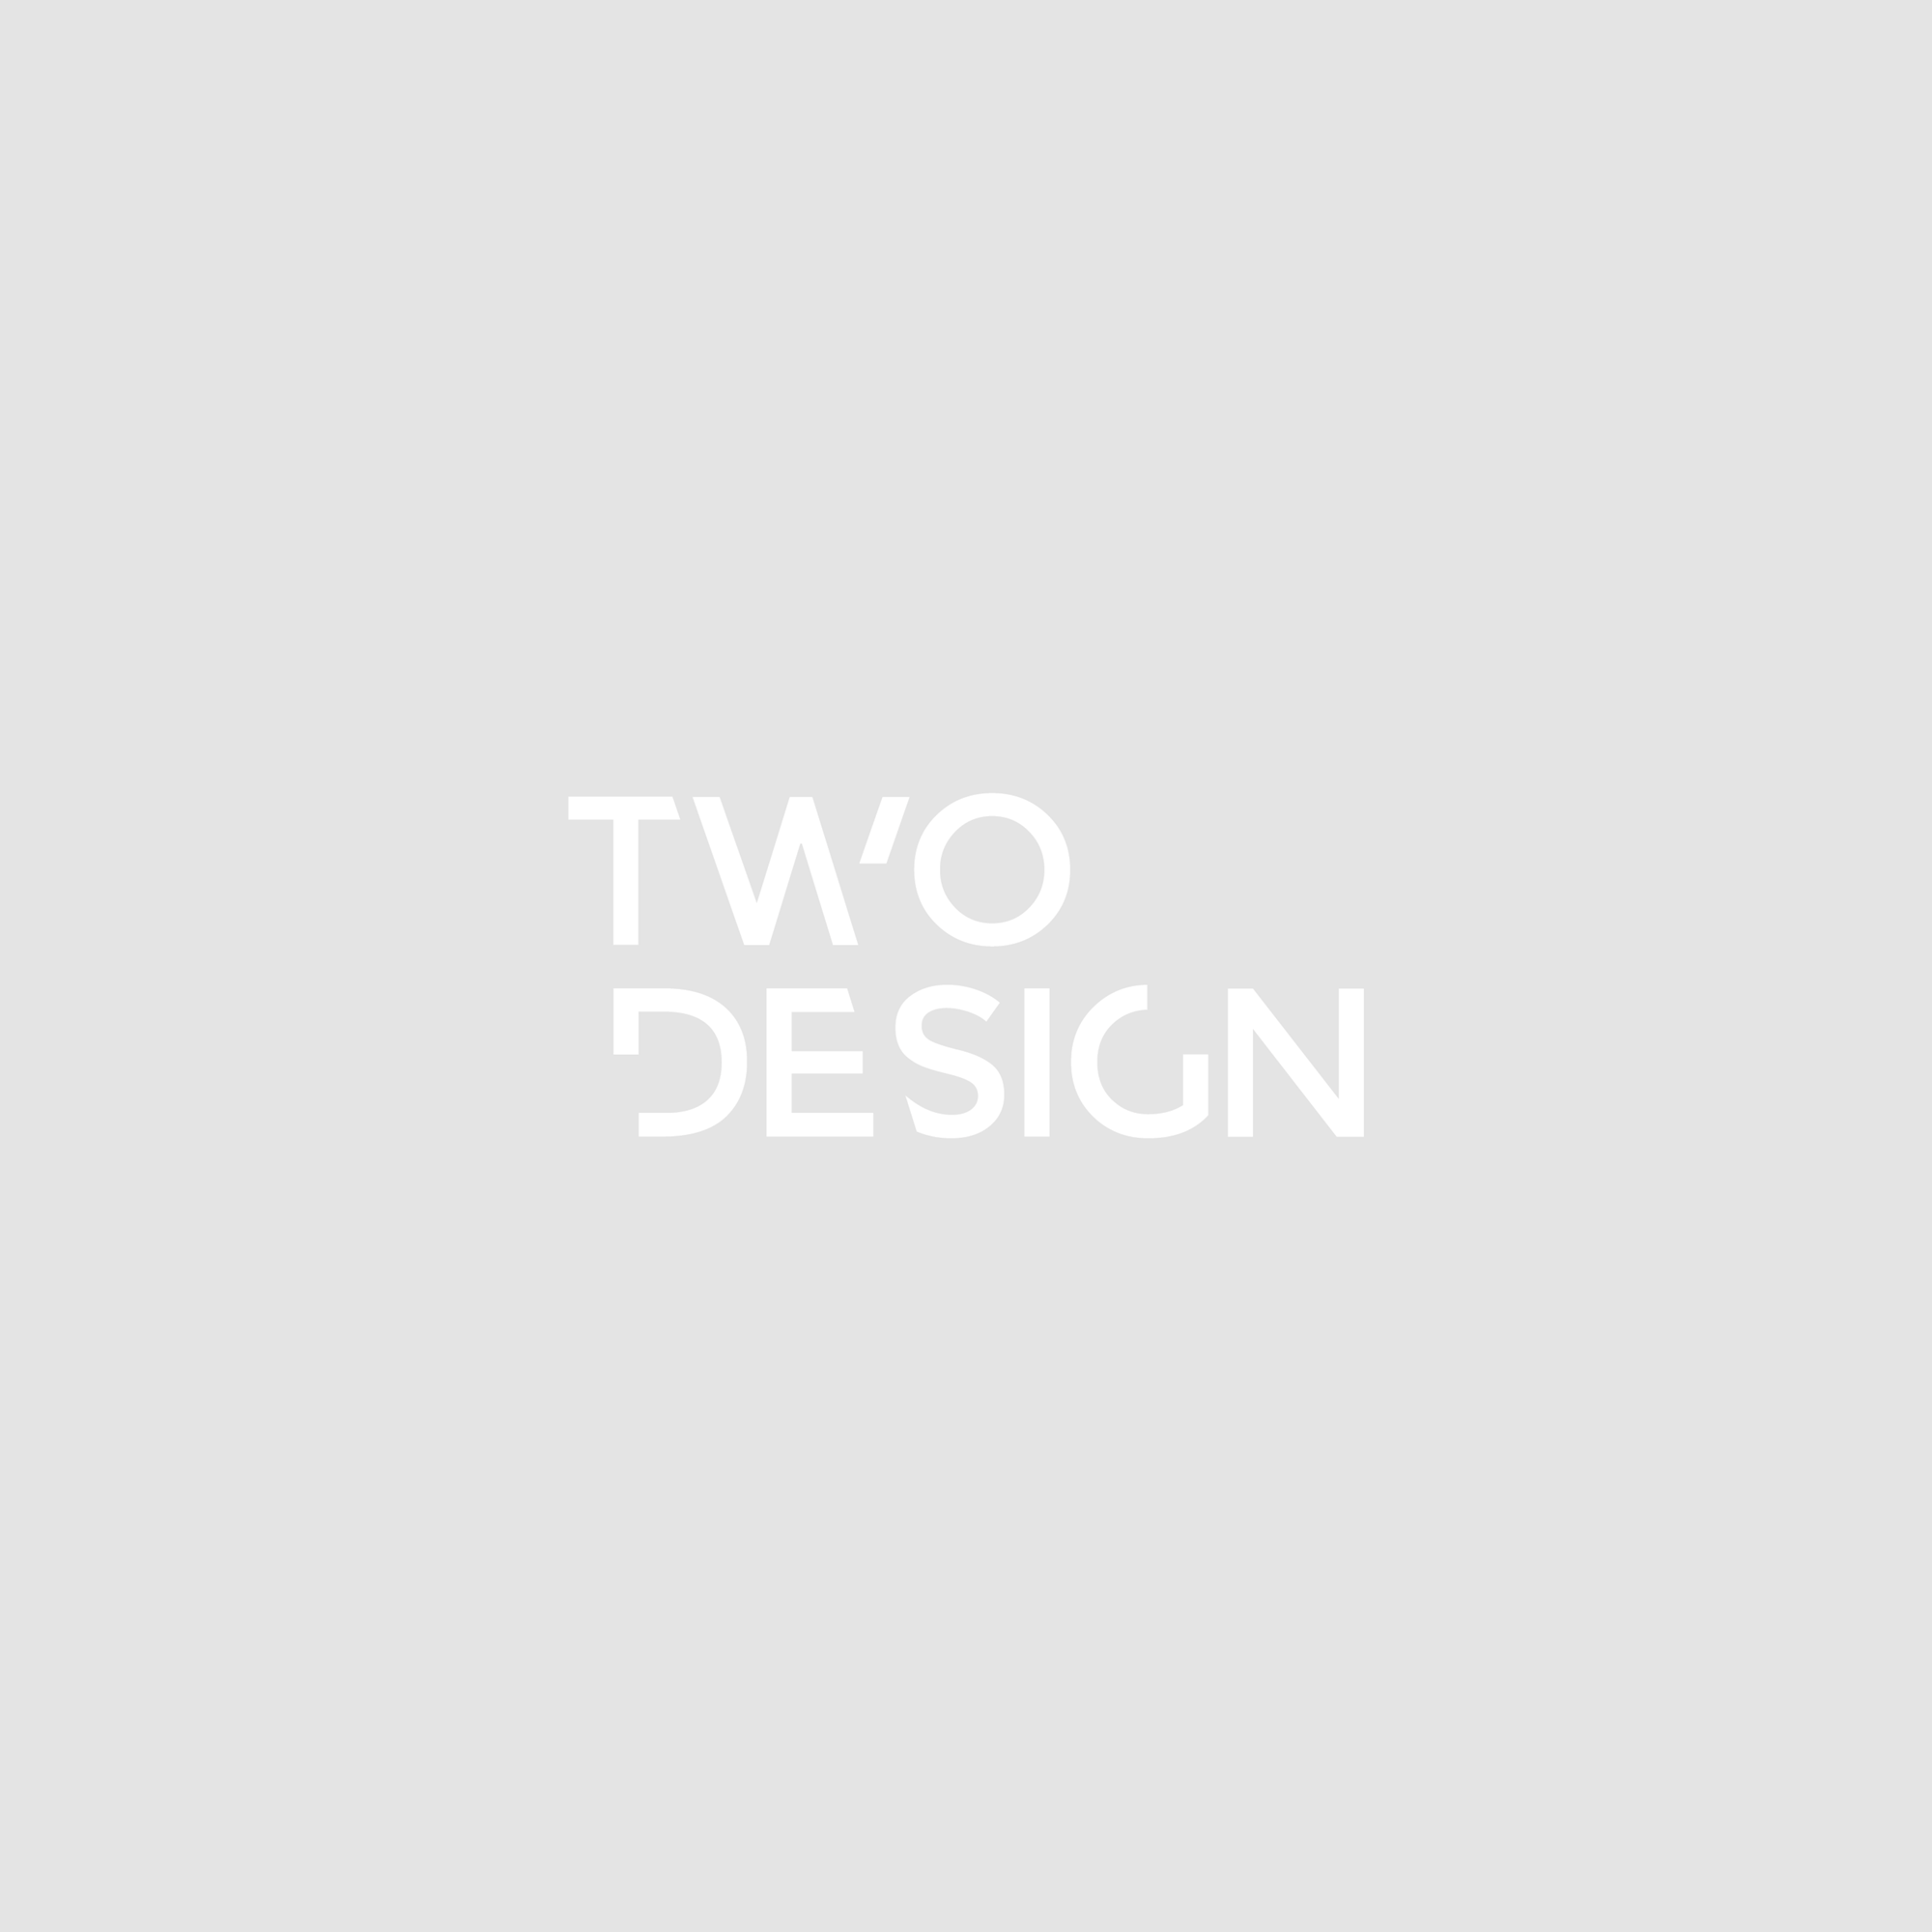 Two_design_placeholder 5.jpg